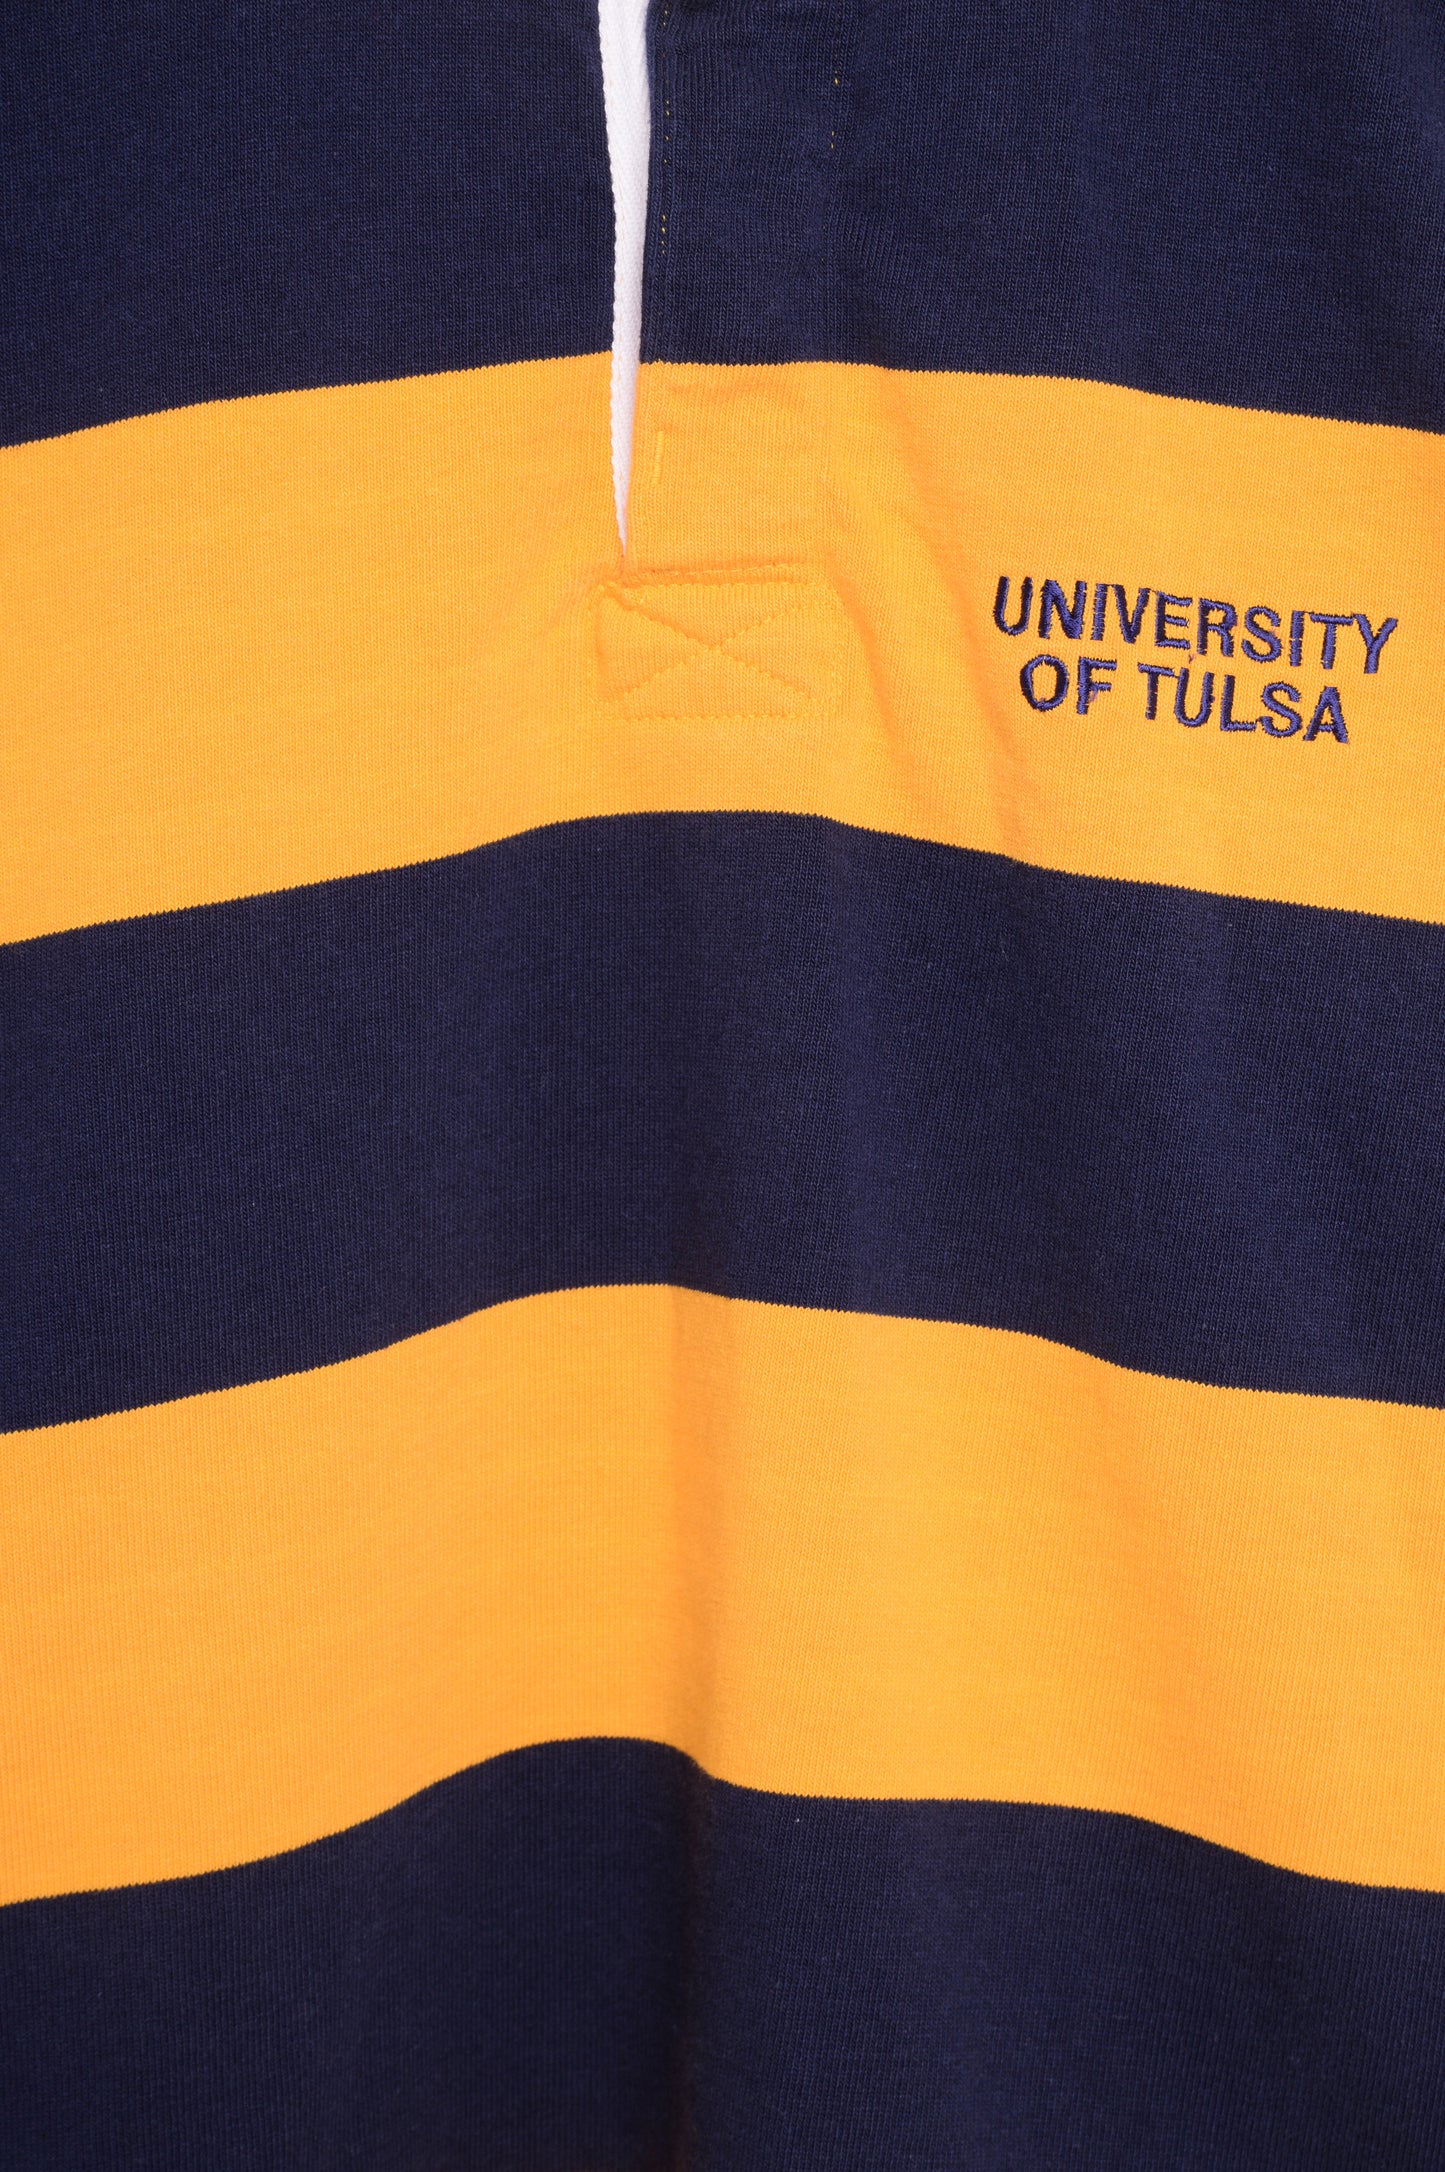 University of Tulsa Rugby Shirt